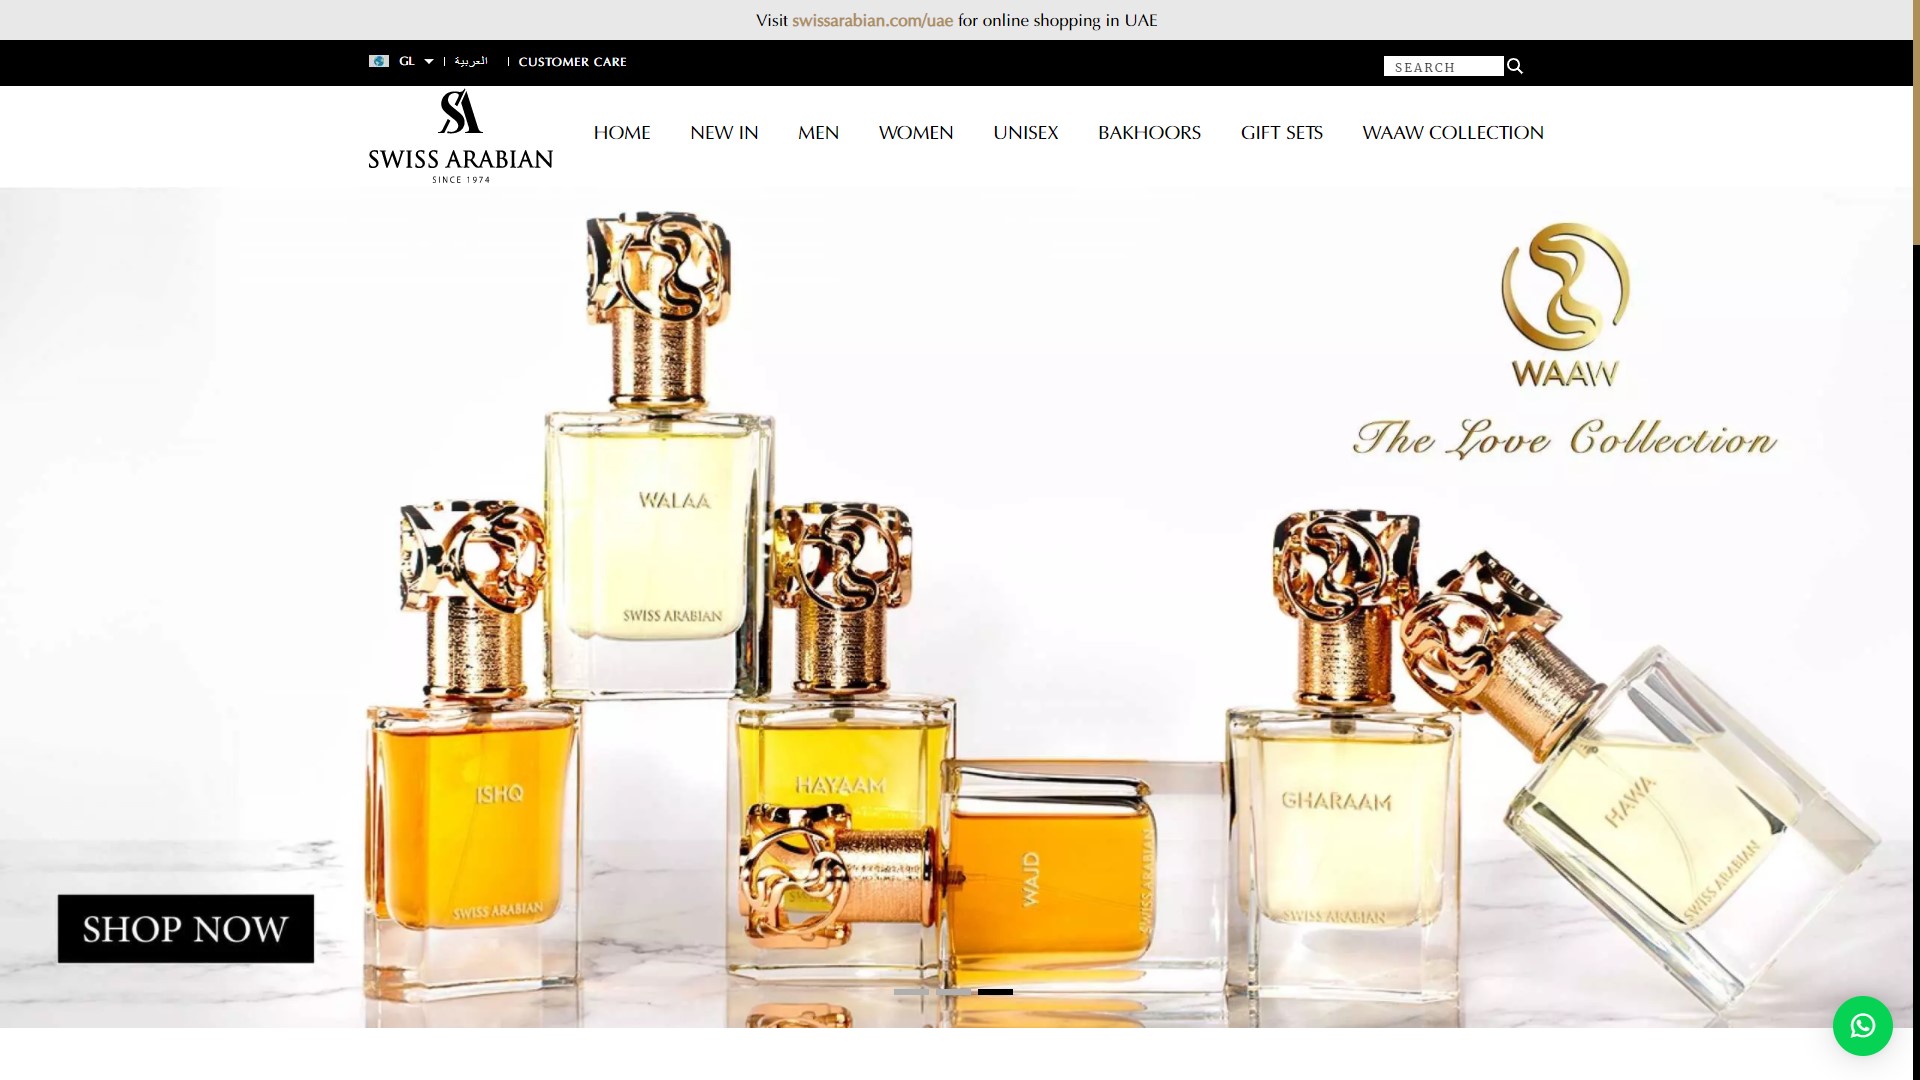 Swiss arabian perfumes all winners interaction design